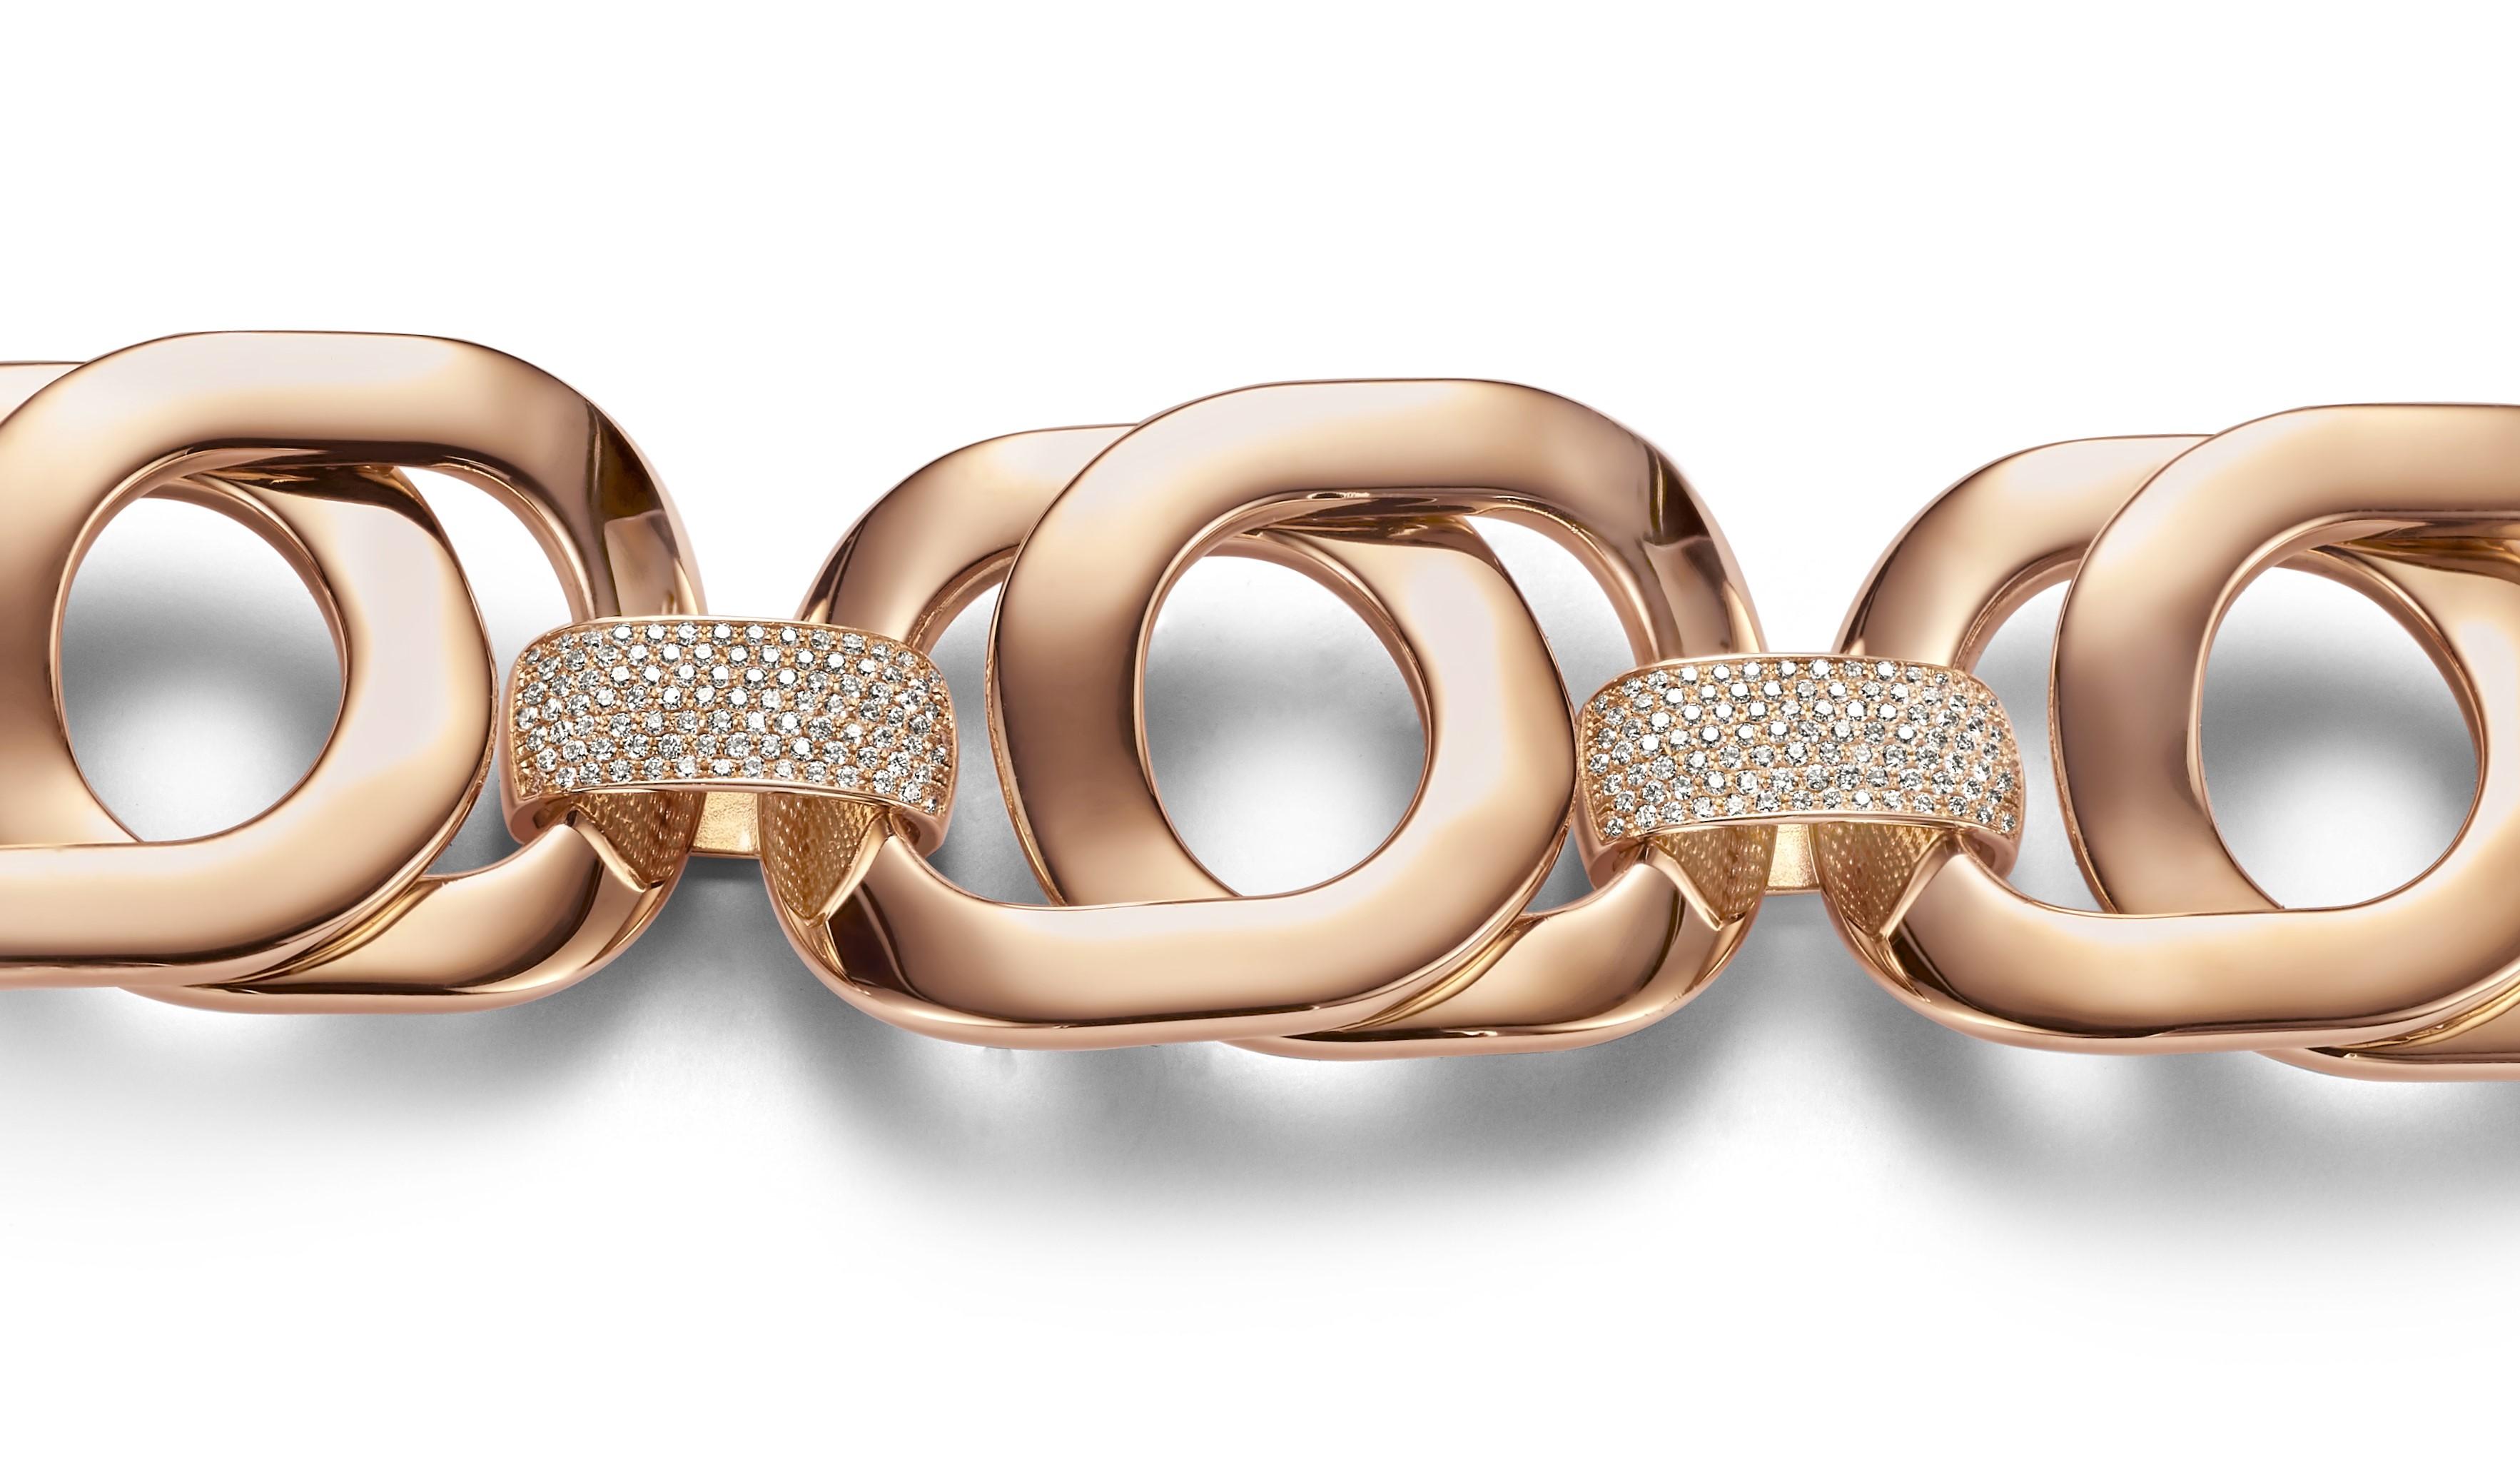 Artisan Massive 18 kt. rose gold Link / Chain Bracelet With 3.99 ct. Diamonds For Sale